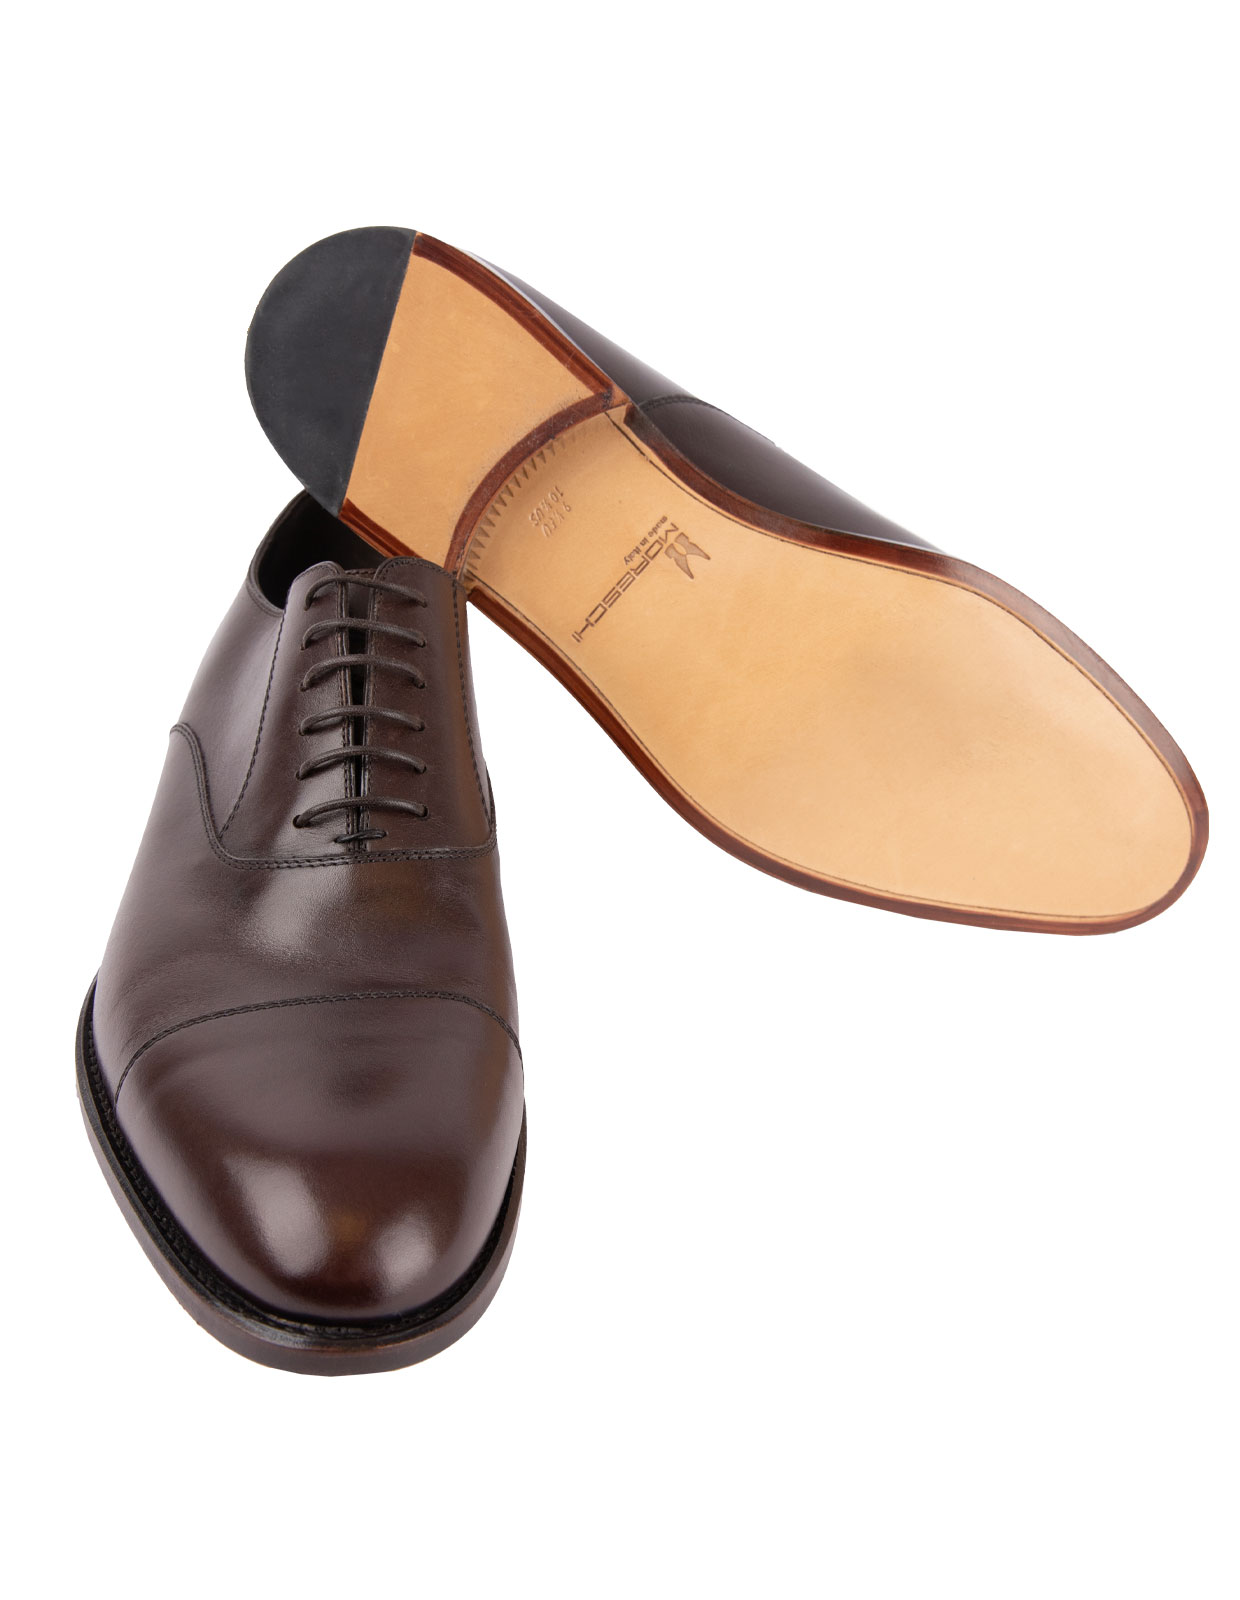 New York Oxford Shoes Calfskin Brown Stl 7.5